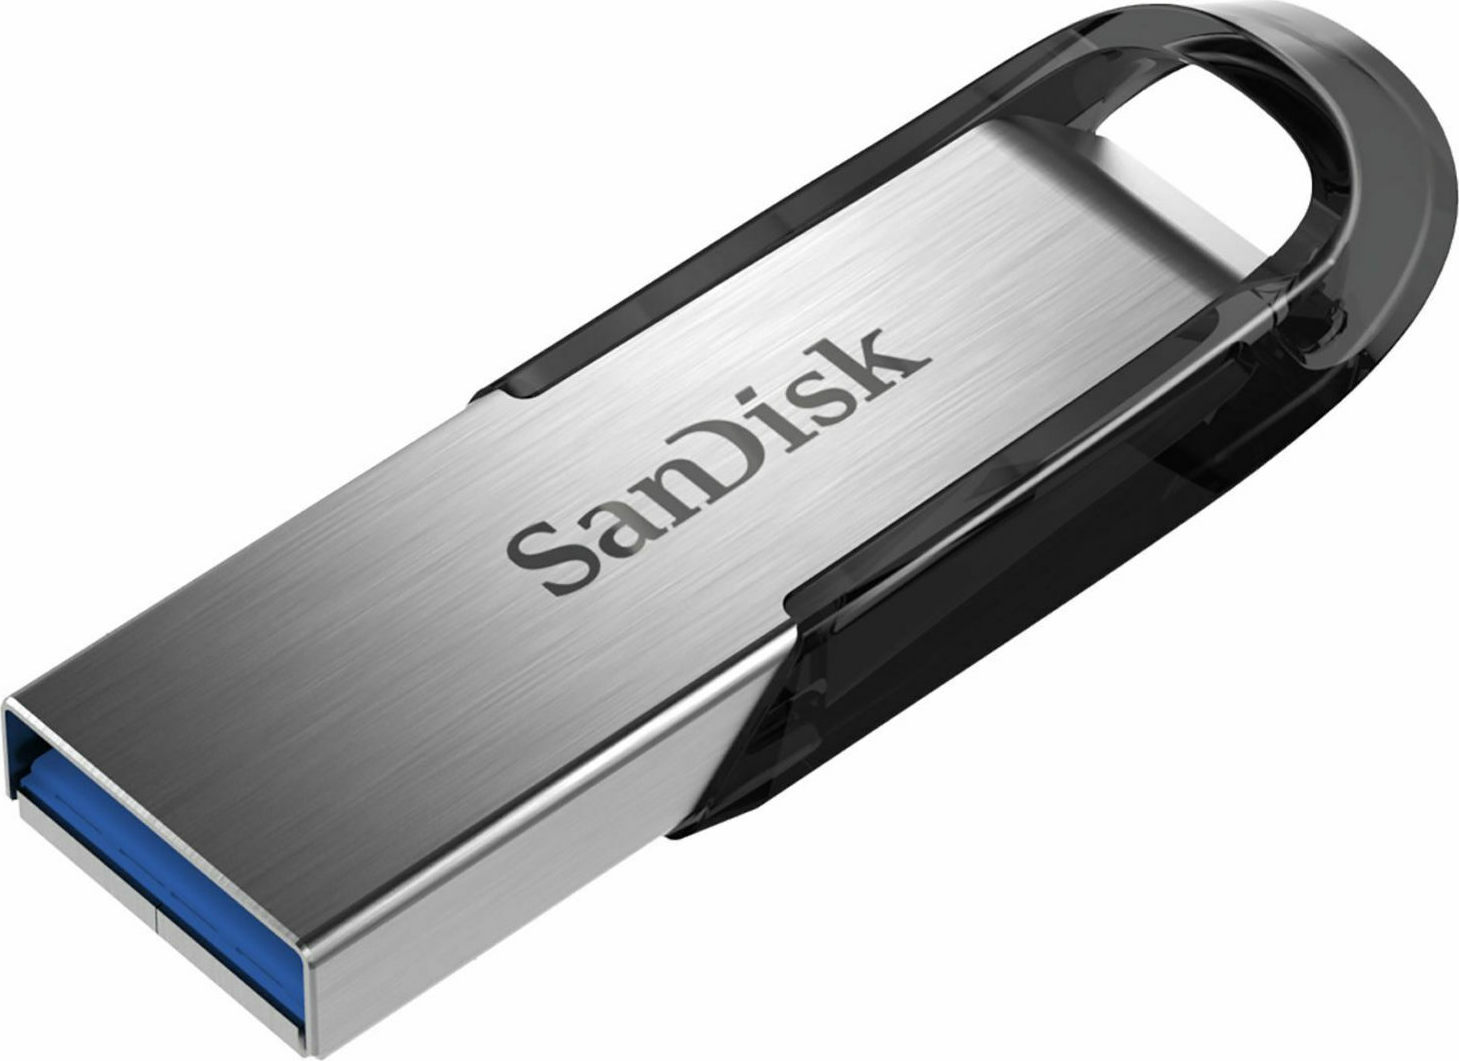 STICK 128GB USB 3.0 SanDisk Ultra Flair silver